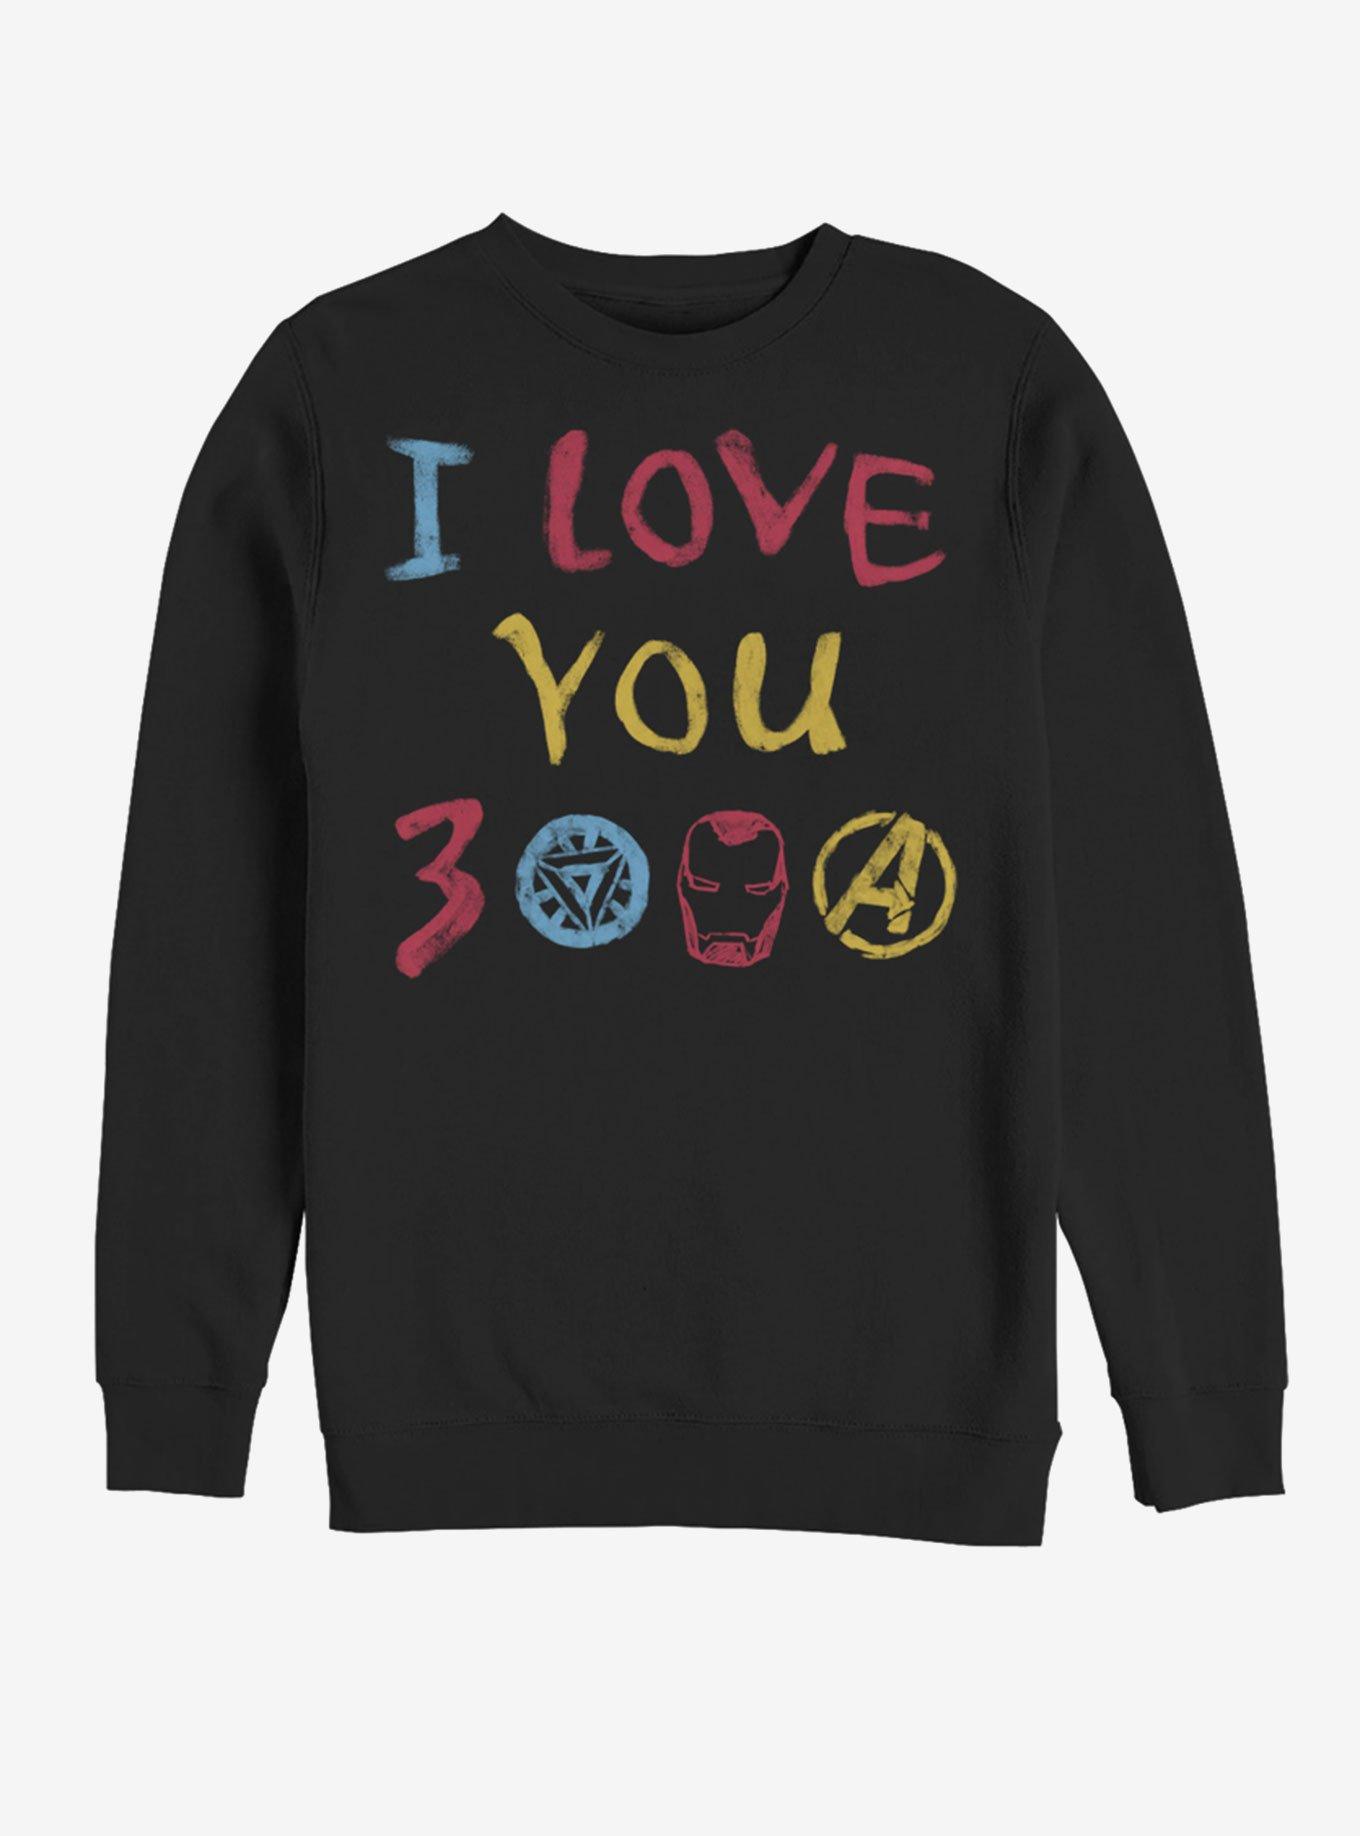 Marvel Avengers: Endgame Love Hand Drawn Sweatshirt